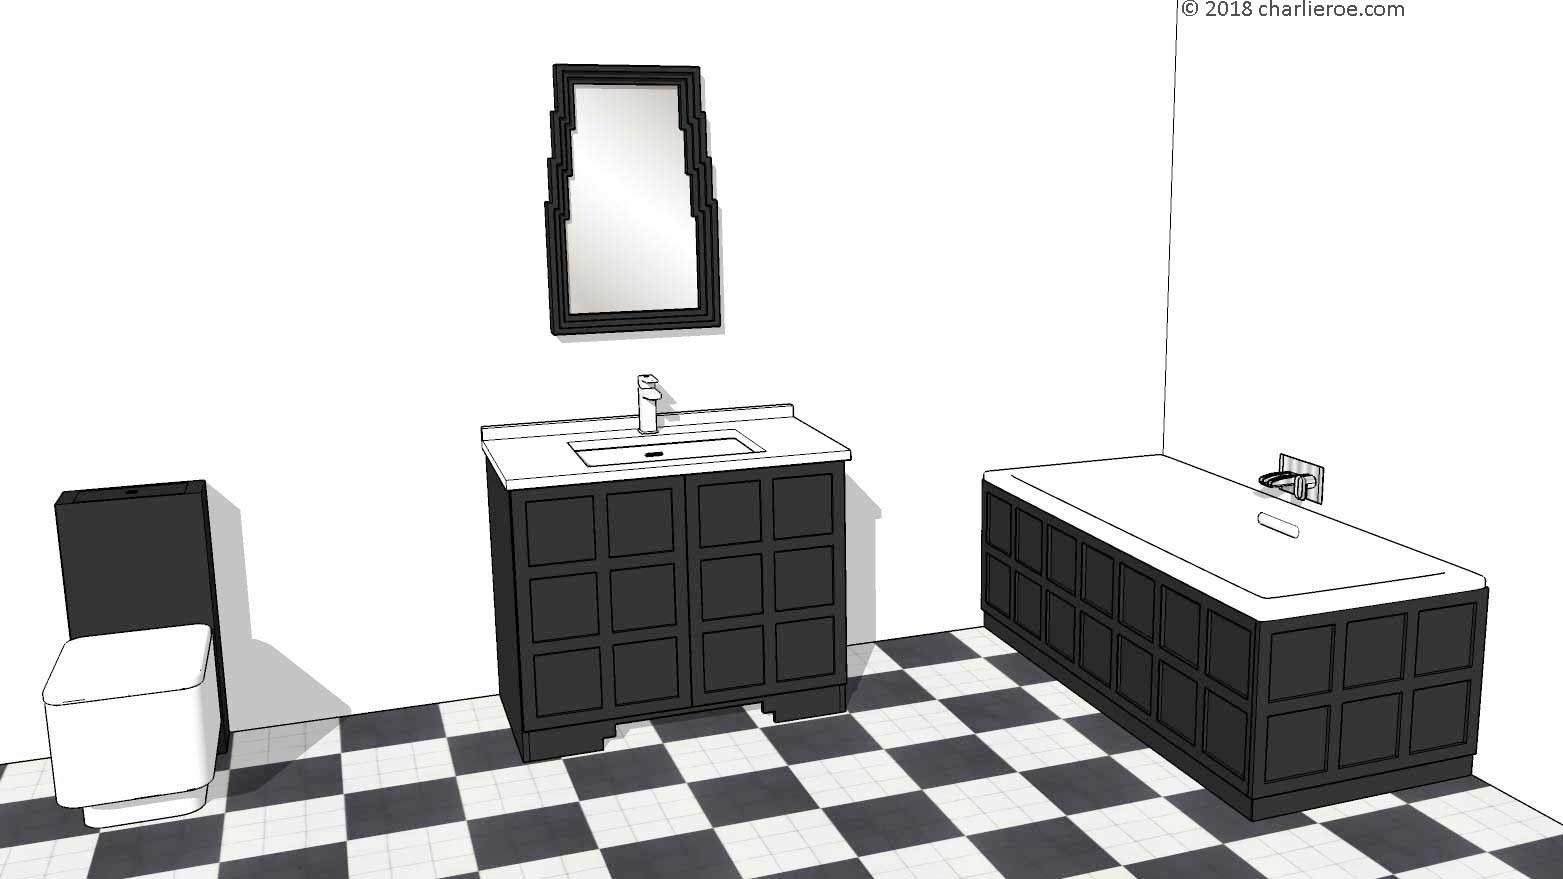 CR Mackintosh Derngate style black painted bathroom furniture, including a 2 door vanity unit, bath panels, & wall mirror